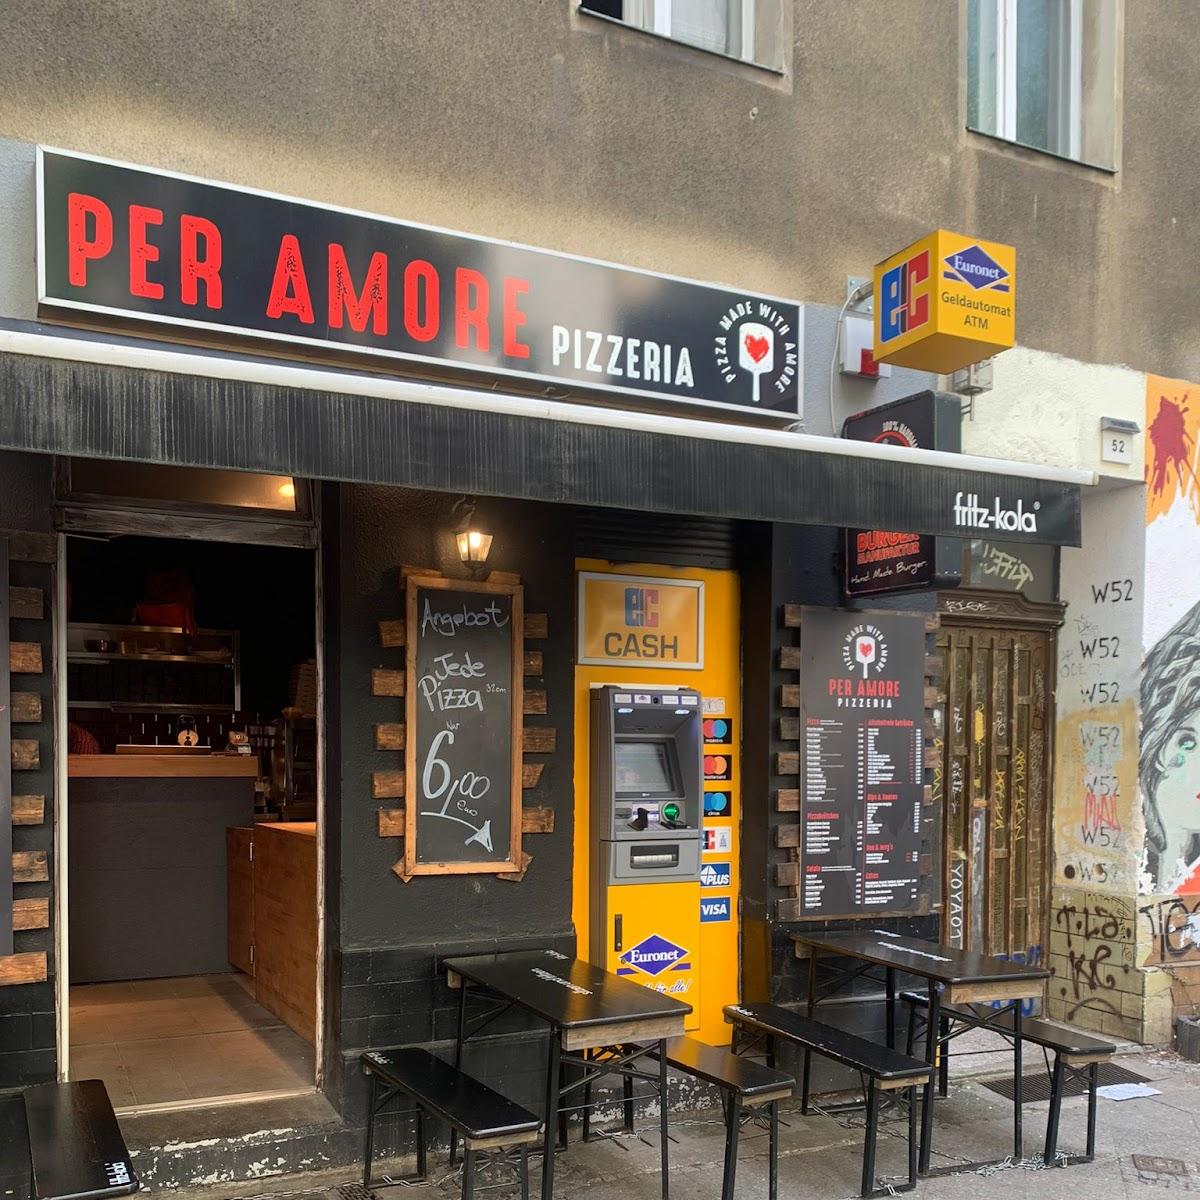 Restaurant "Per Amore" in Berlin